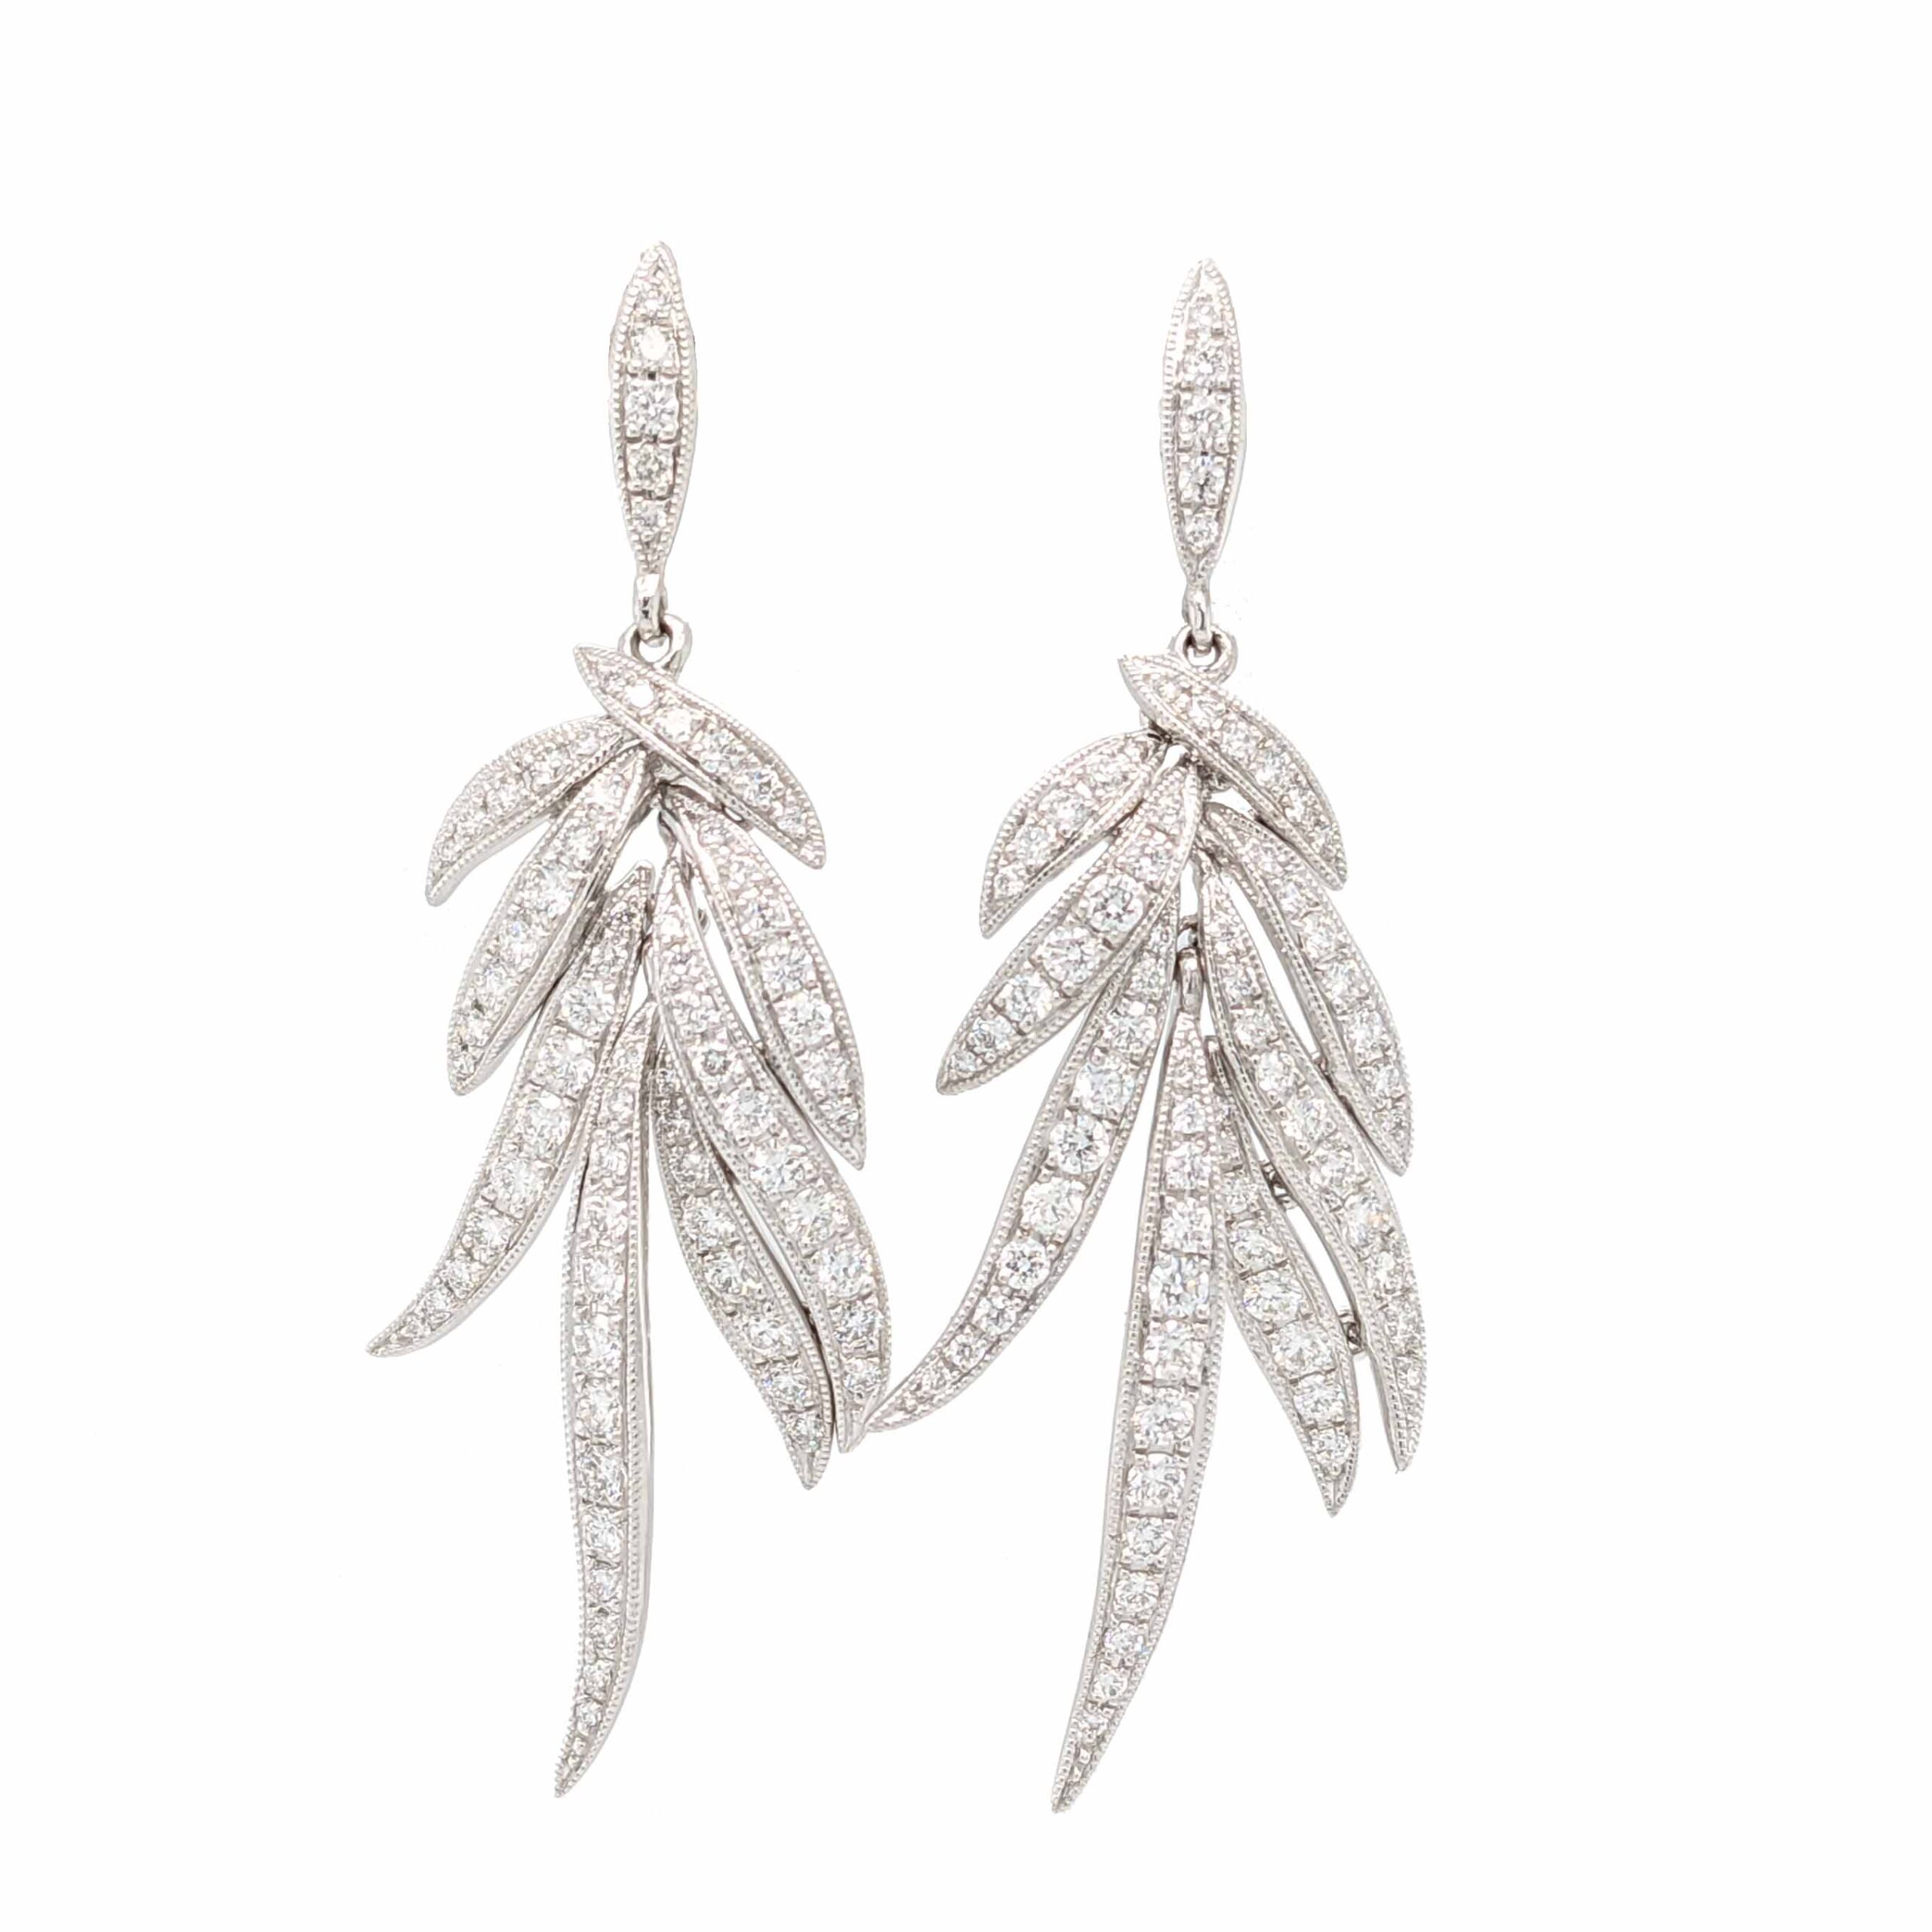 Platinum diamond articulated leaf drop earrings POA on Sally Thorntons jewellery blog from AA Thornton Kettering Northampton 